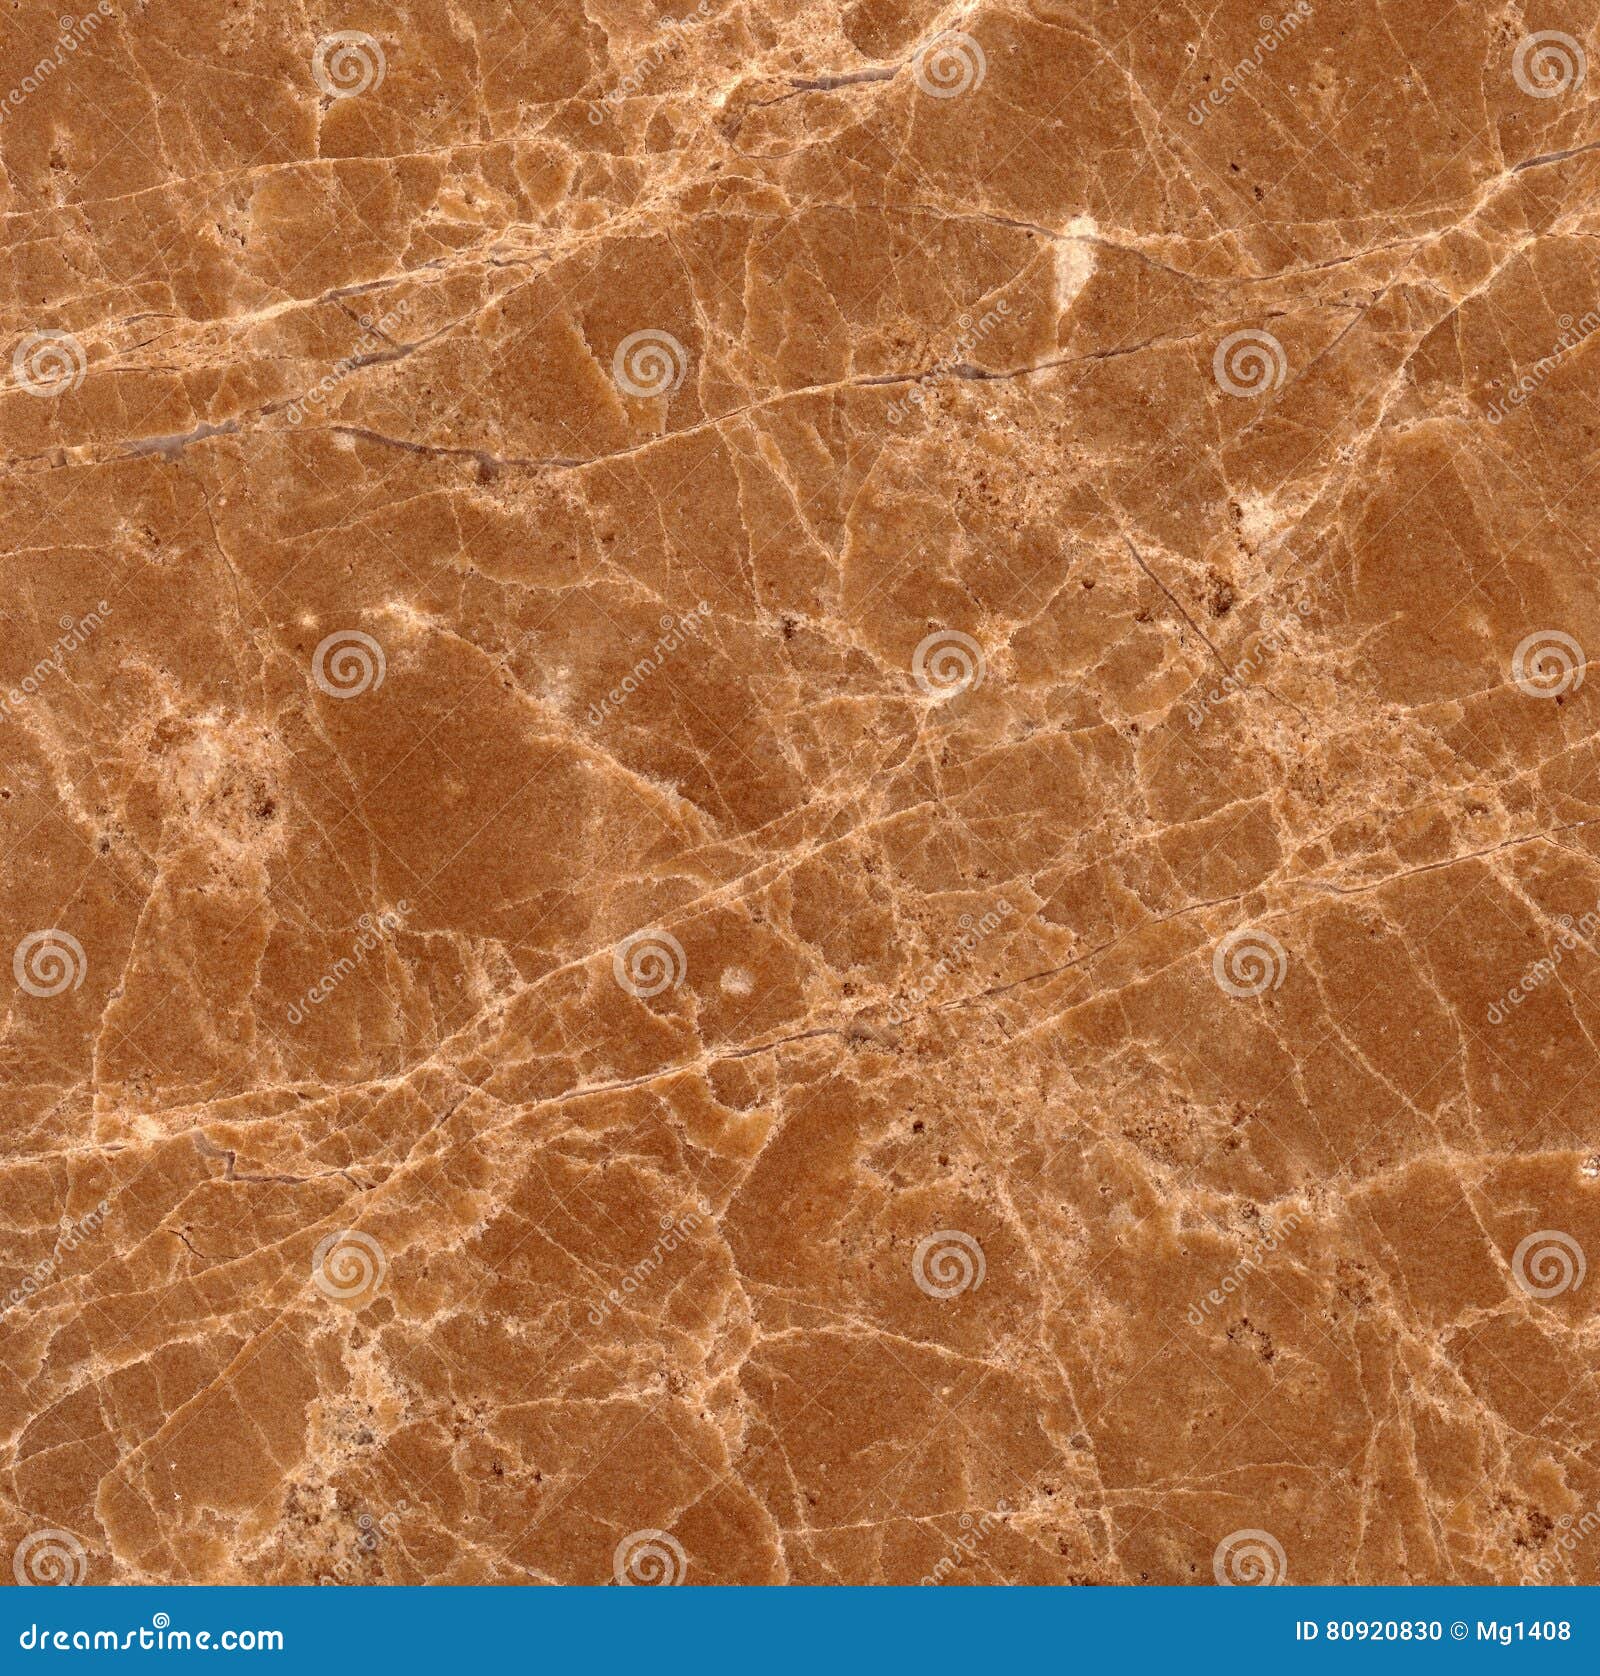 brown emperador marble texture background,